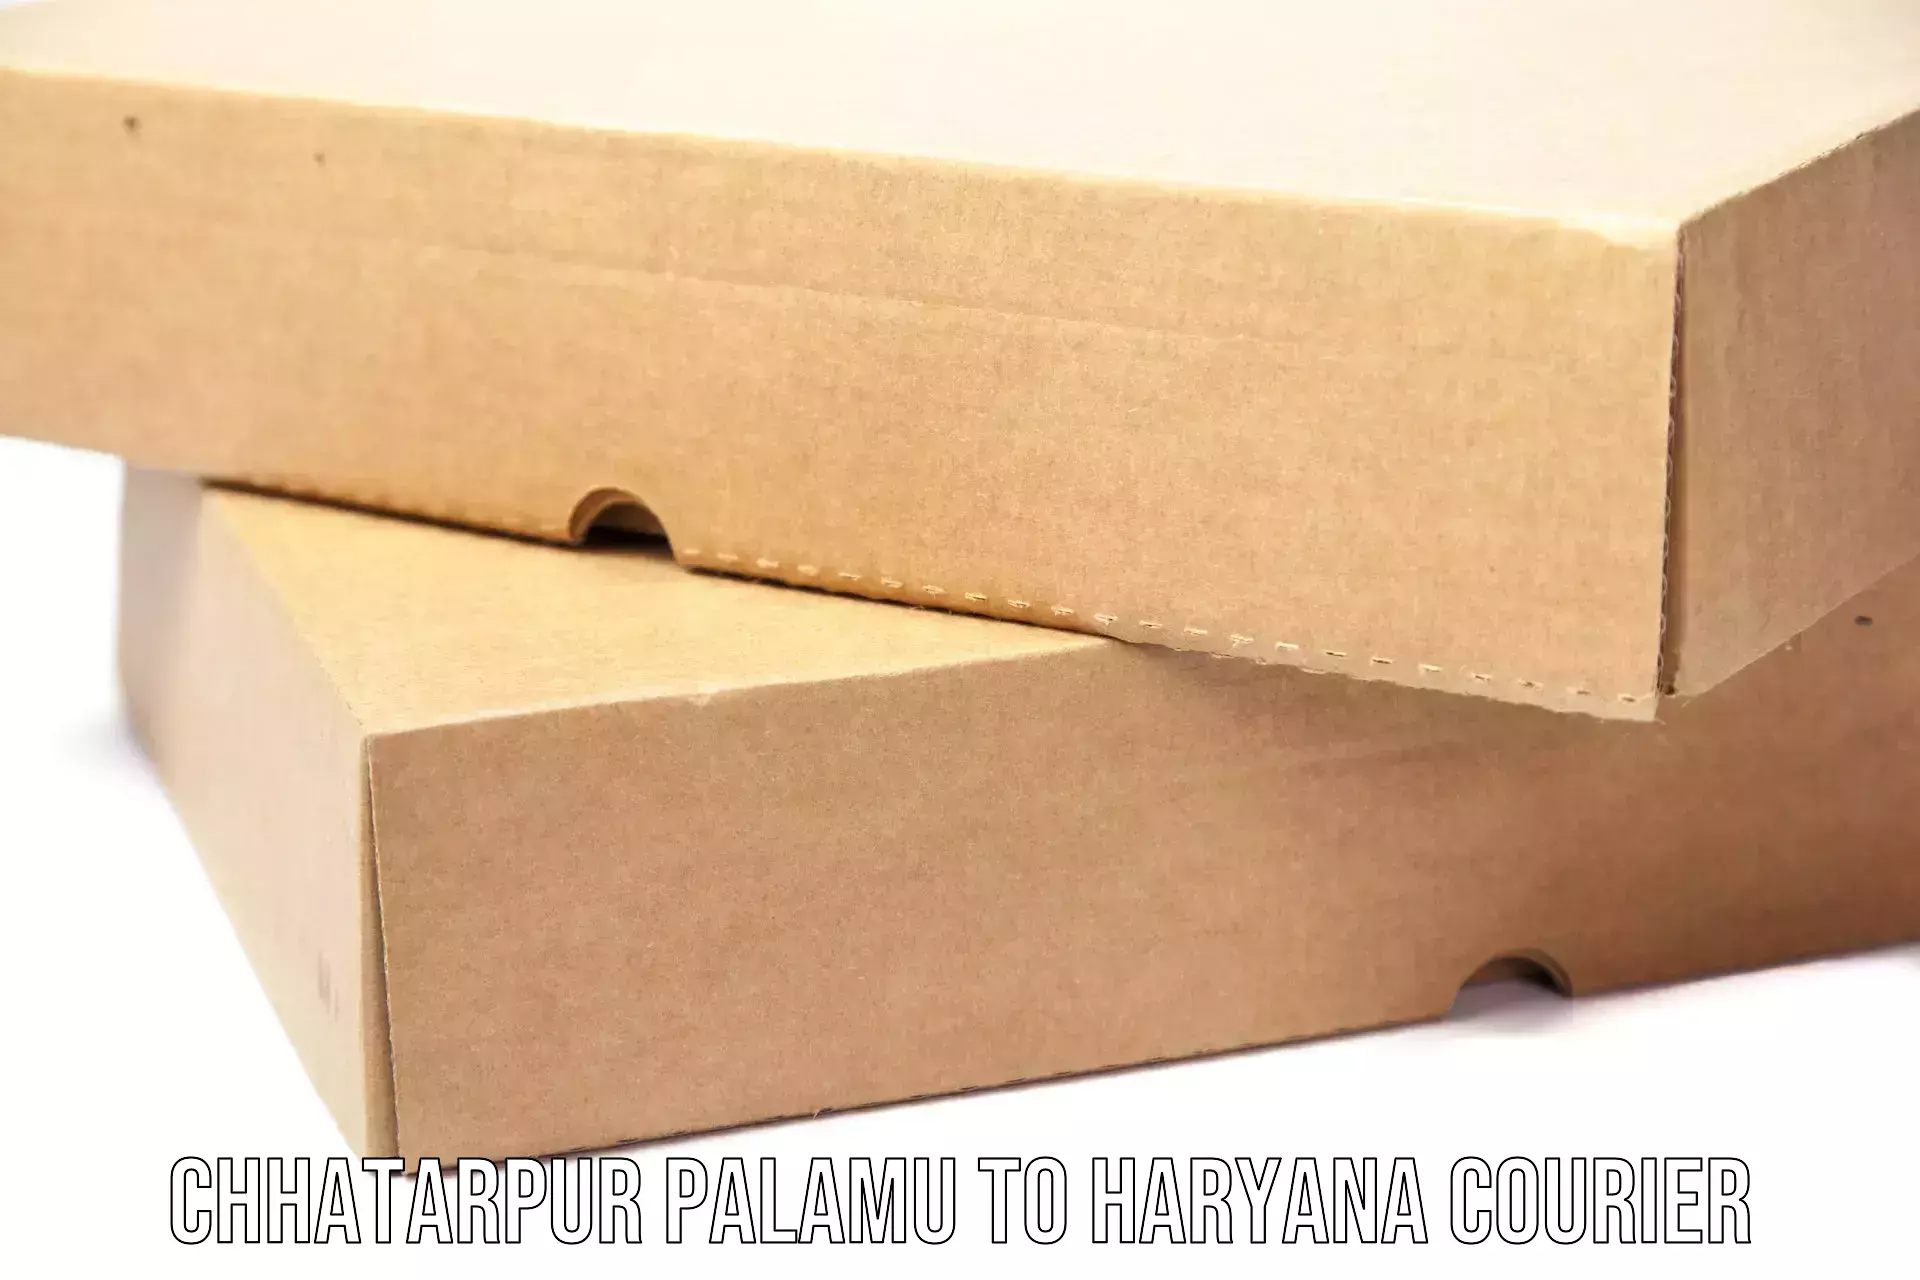 High-speed parcel service Chhatarpur Palamu to Chirya